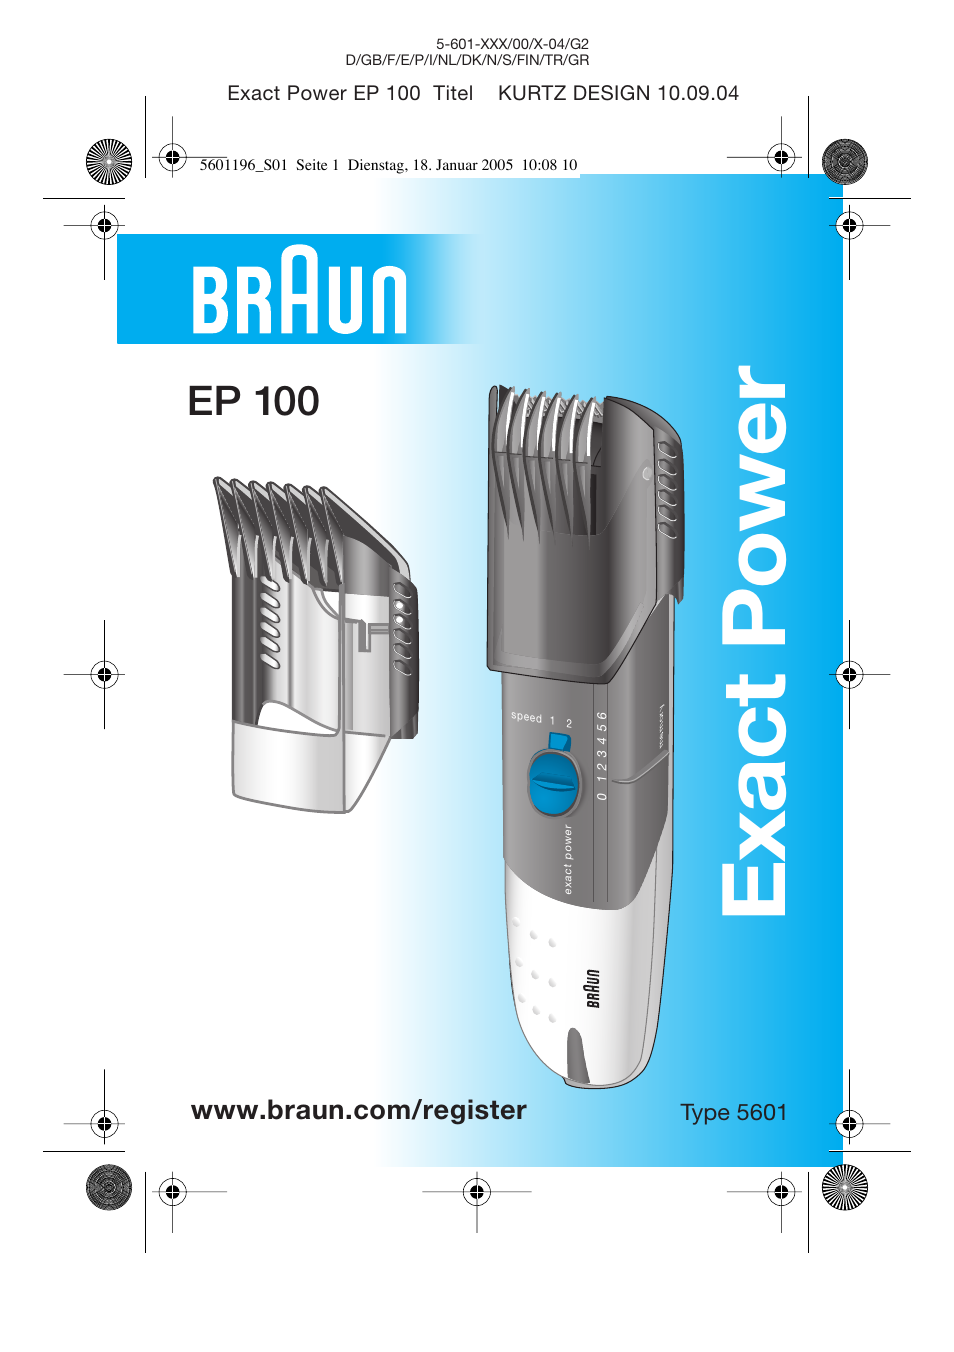 Braun EP100 Exact Power User Manual | 60 pages